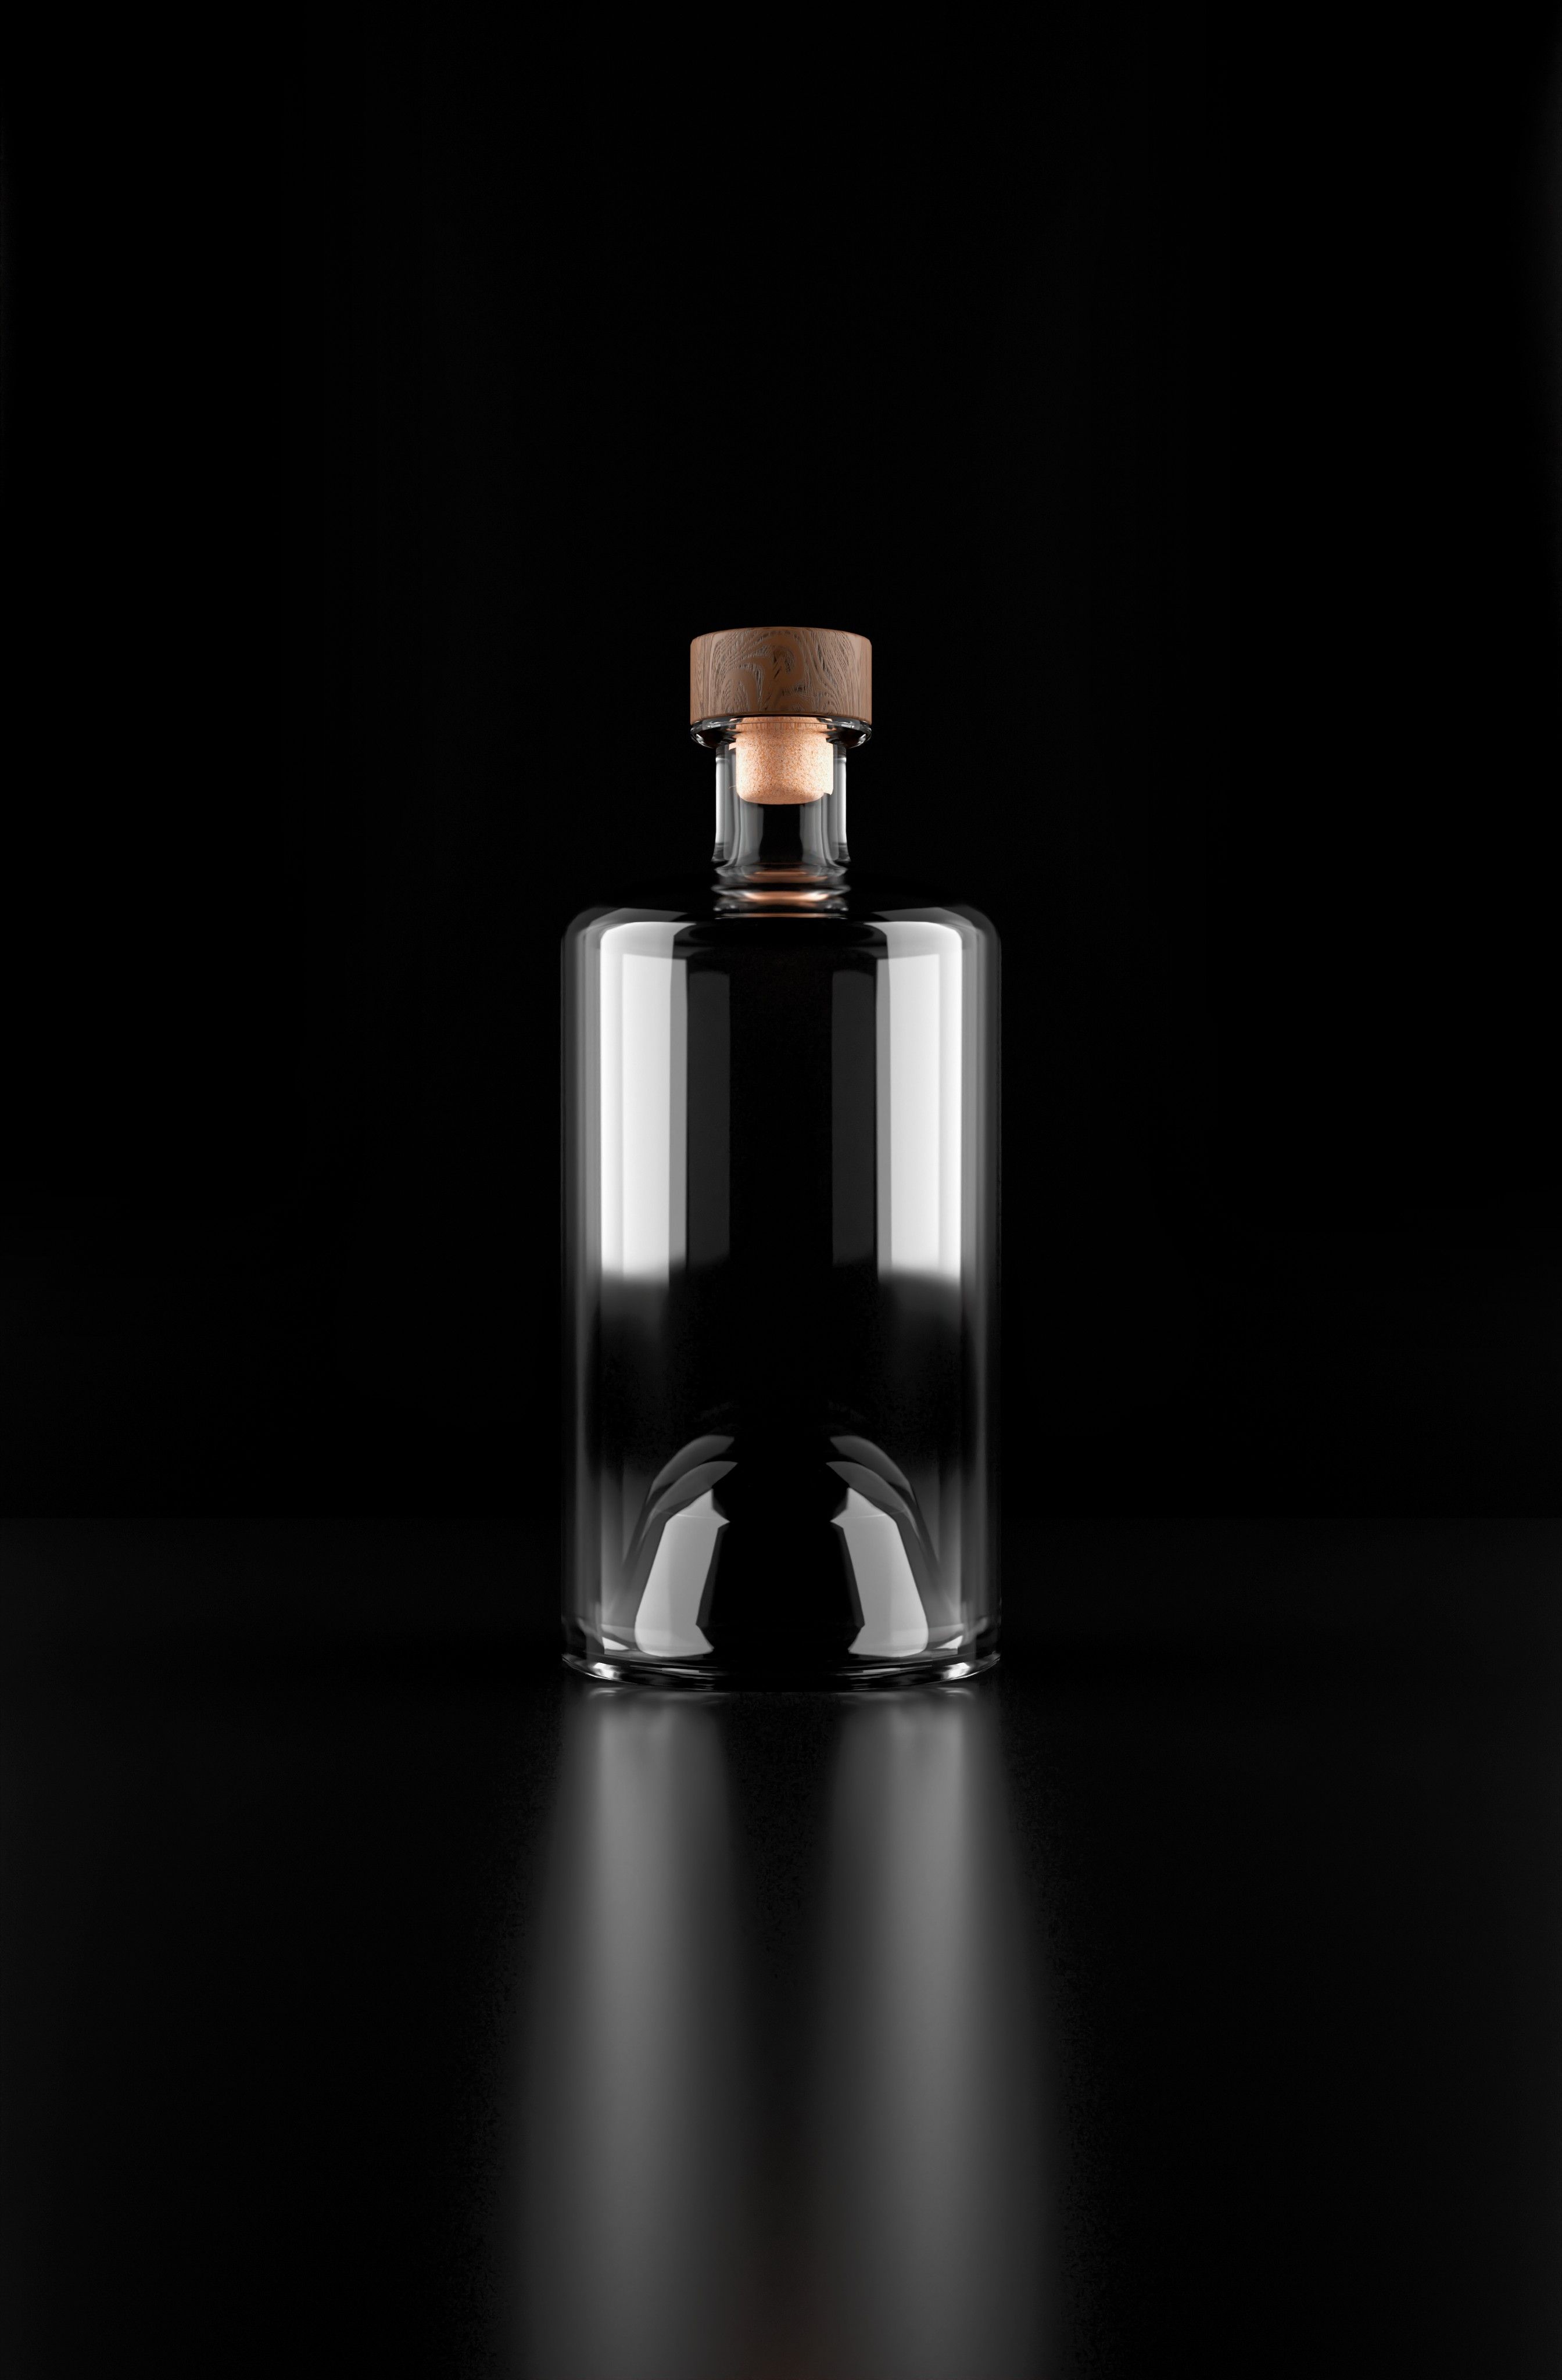 A glass vodka bottle in dark studio lighting